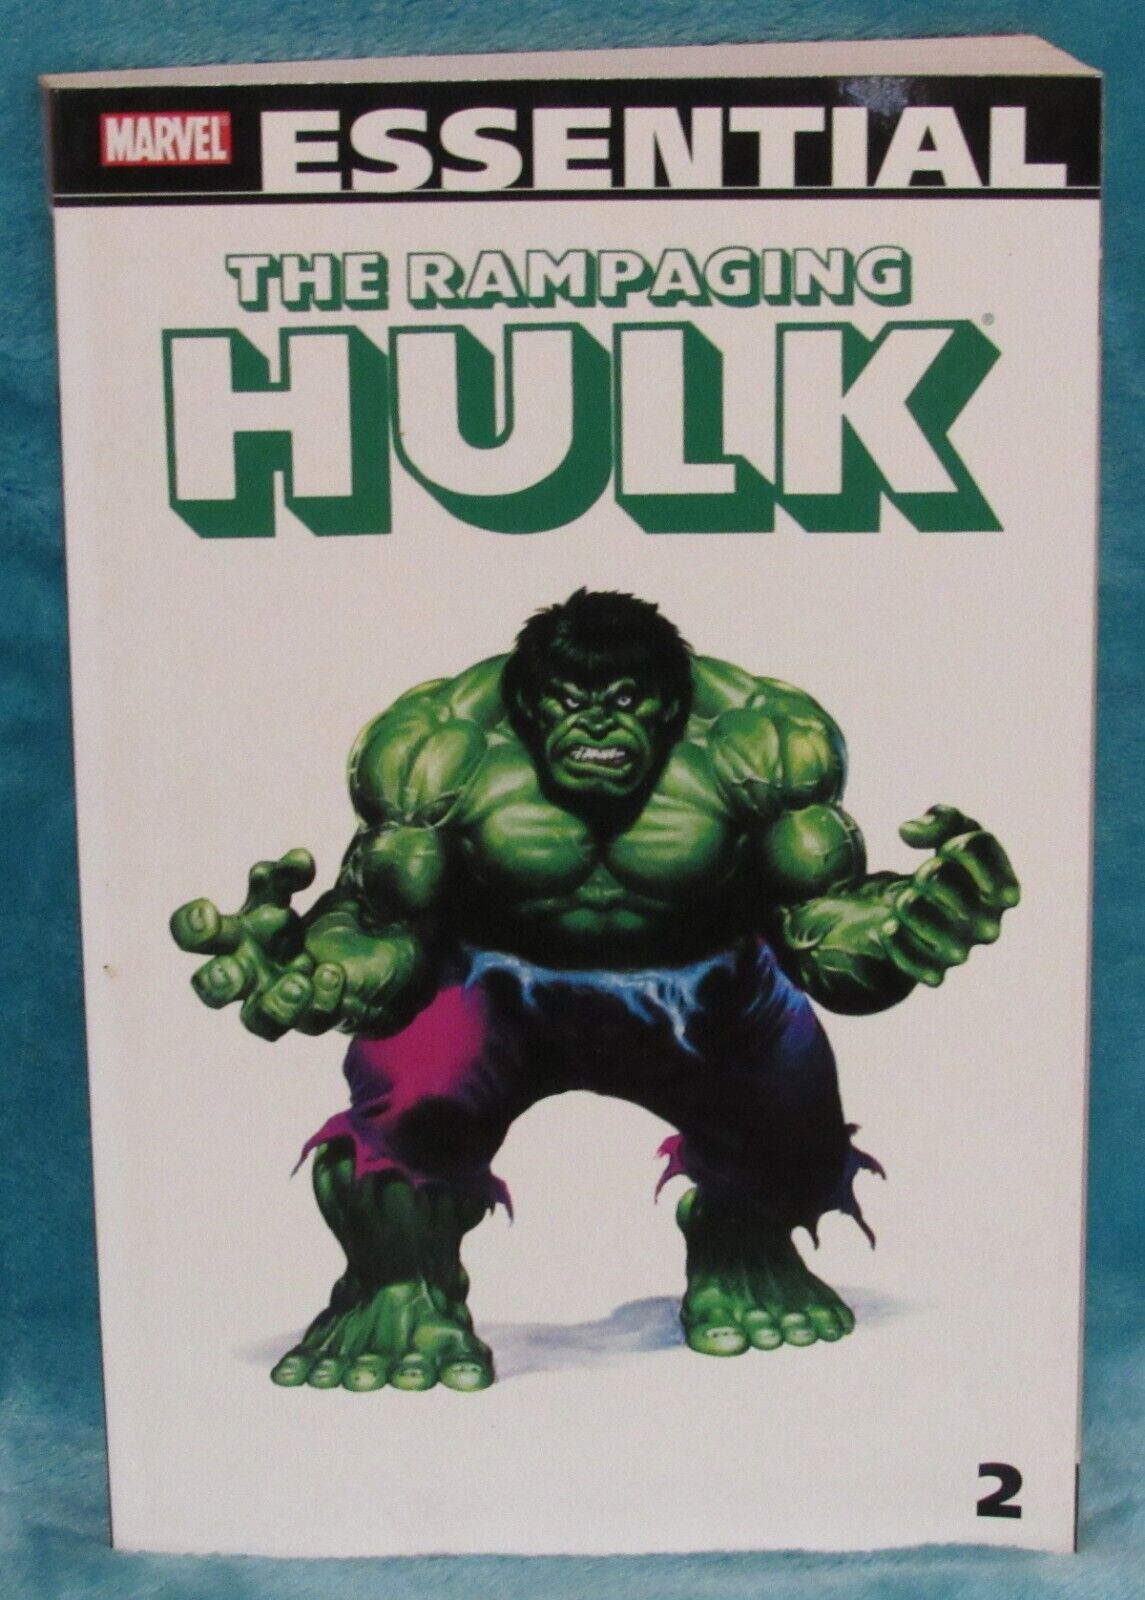 ESSENTIAL THE RAMPAGING HULK Volume 2 TPB Marvel Comics GN 2010 First Printing